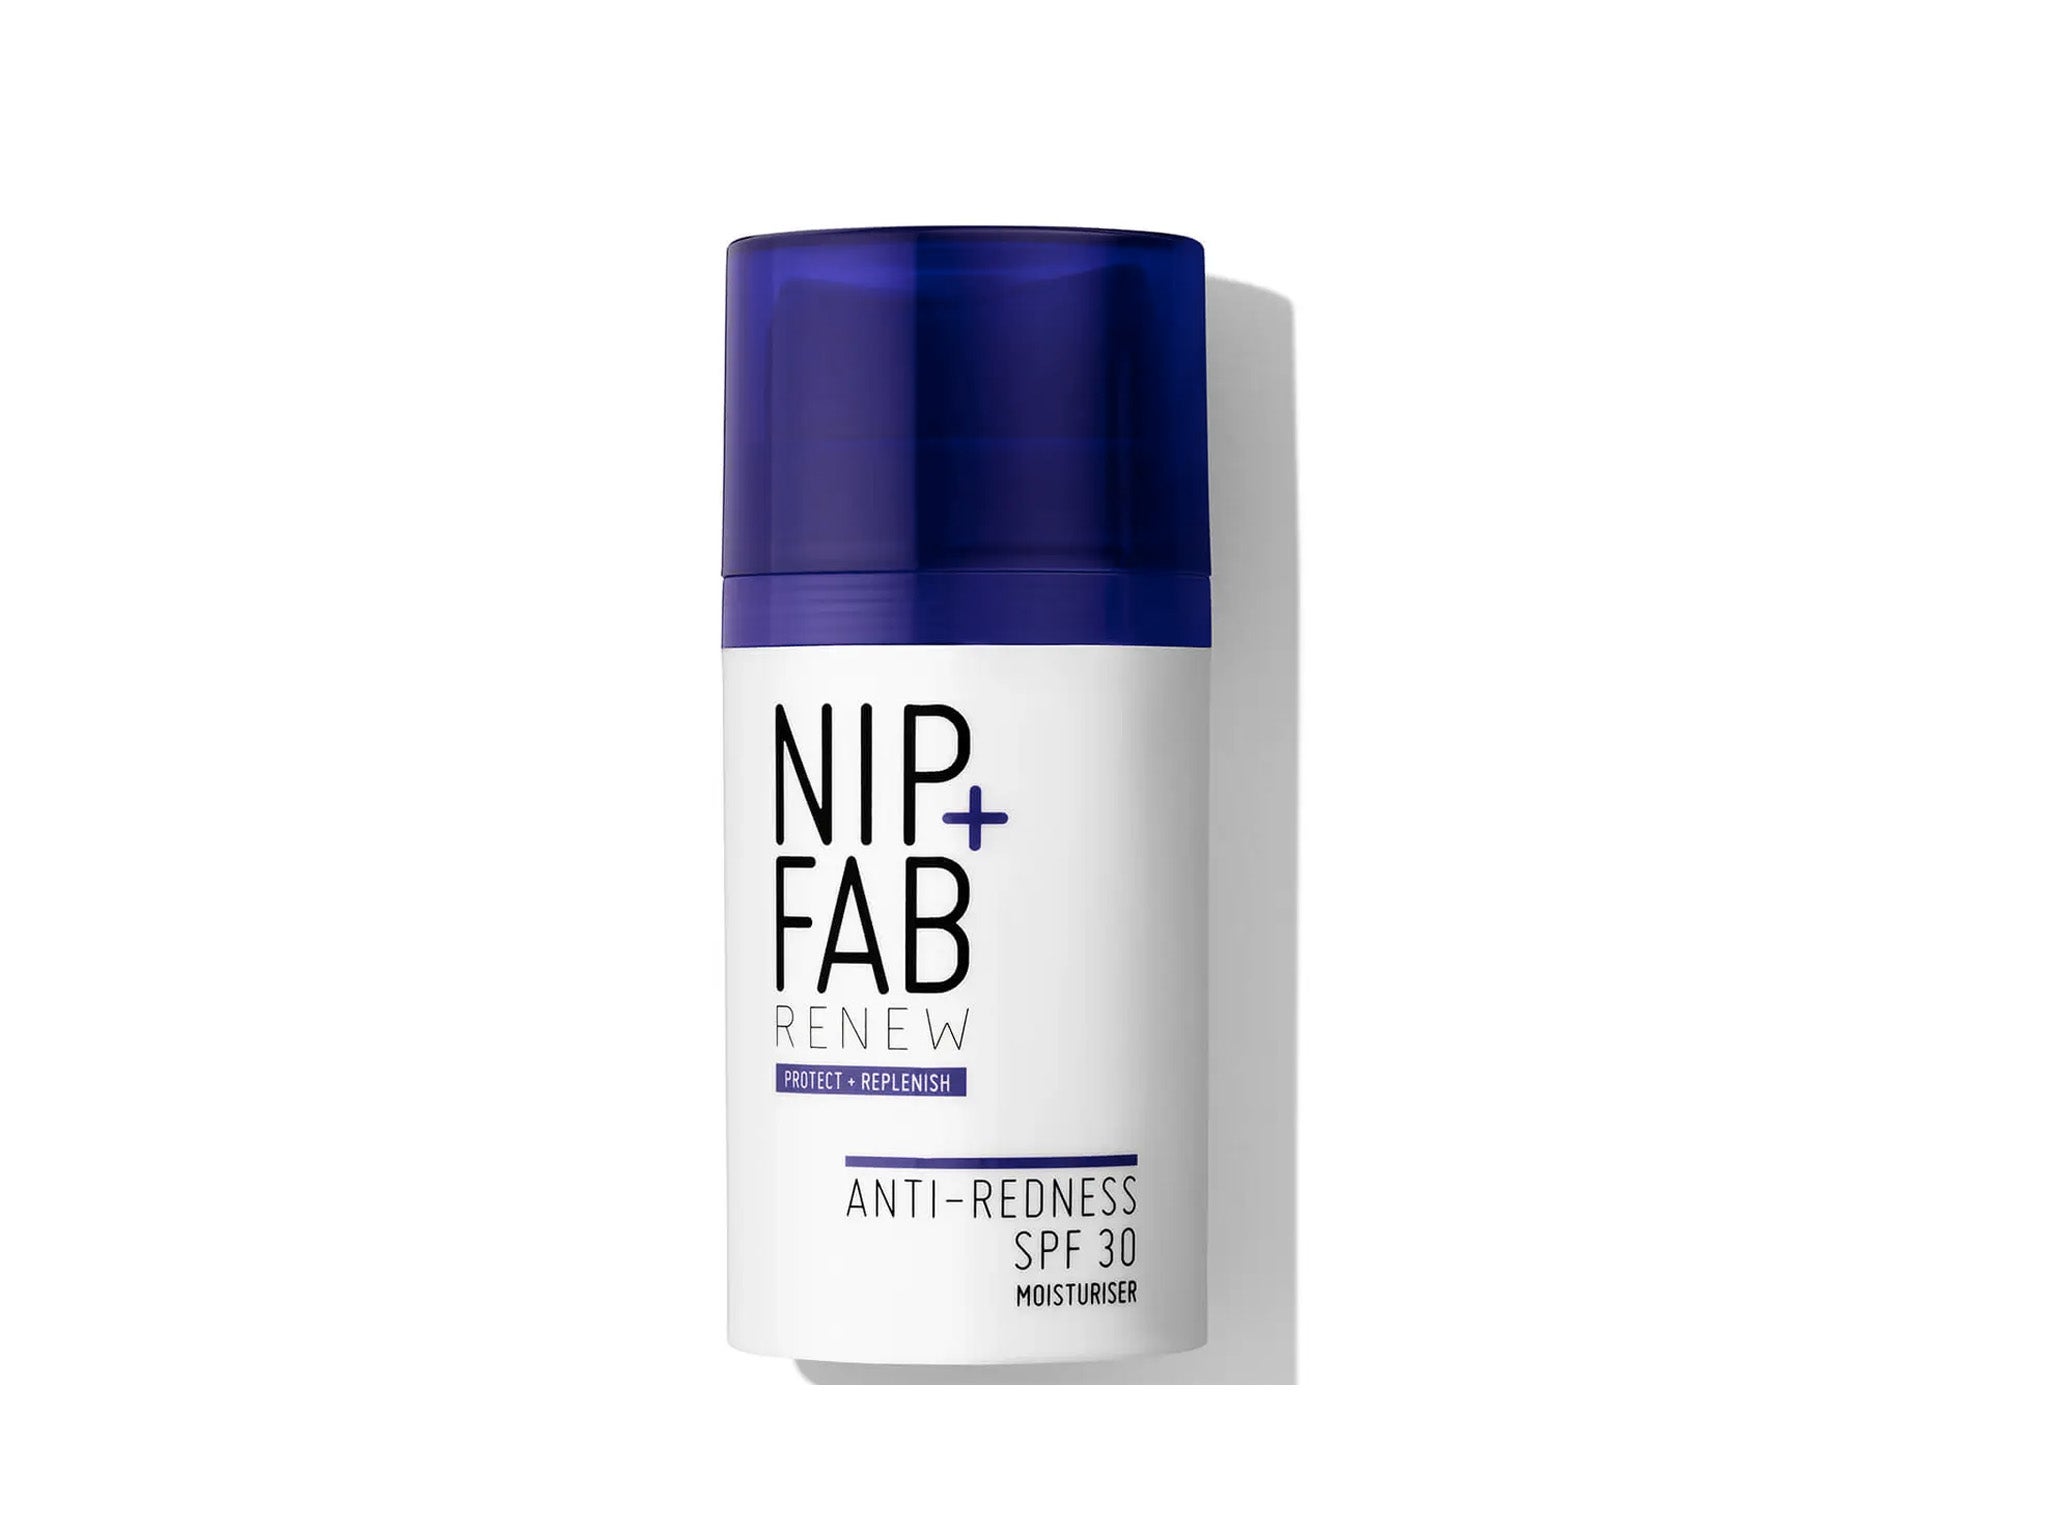 We tried Nip+Fab's new SPF moisturiser range across different skin